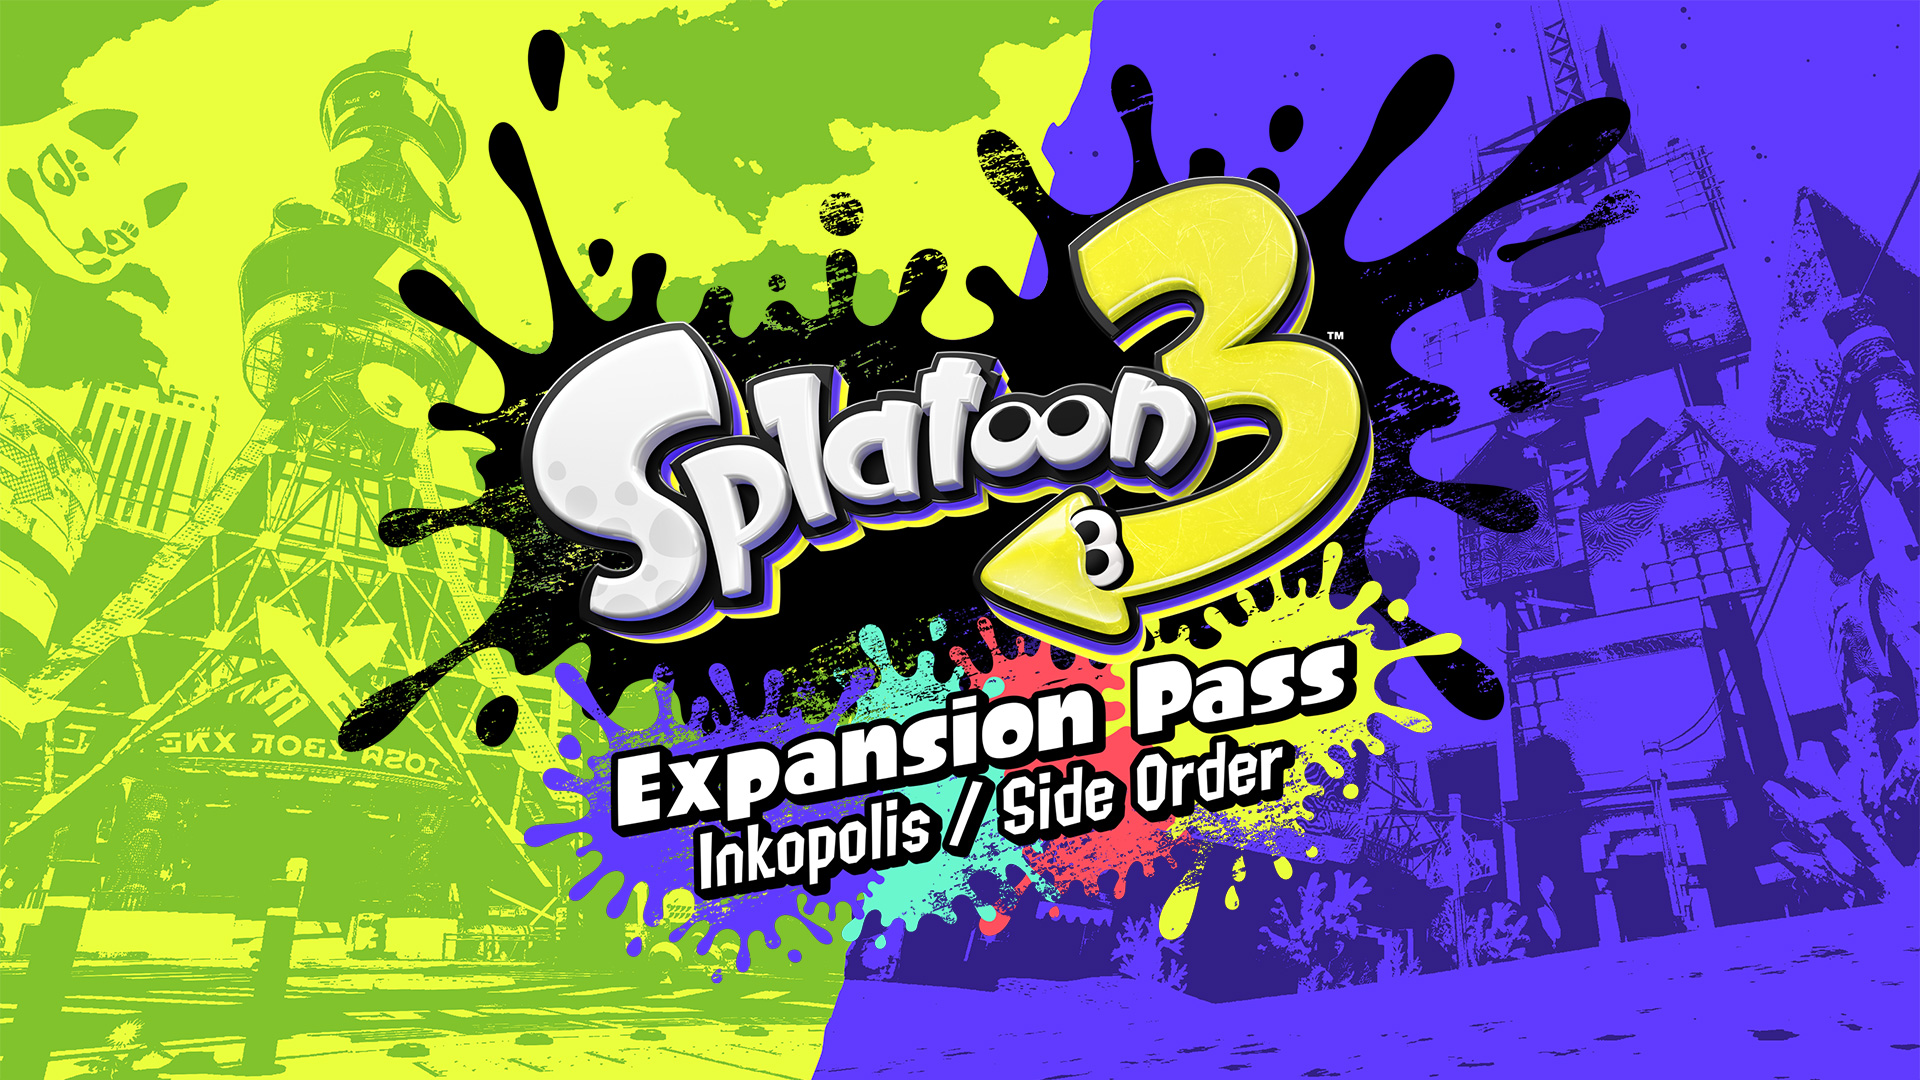 Splatoon 3: Expansion Pass